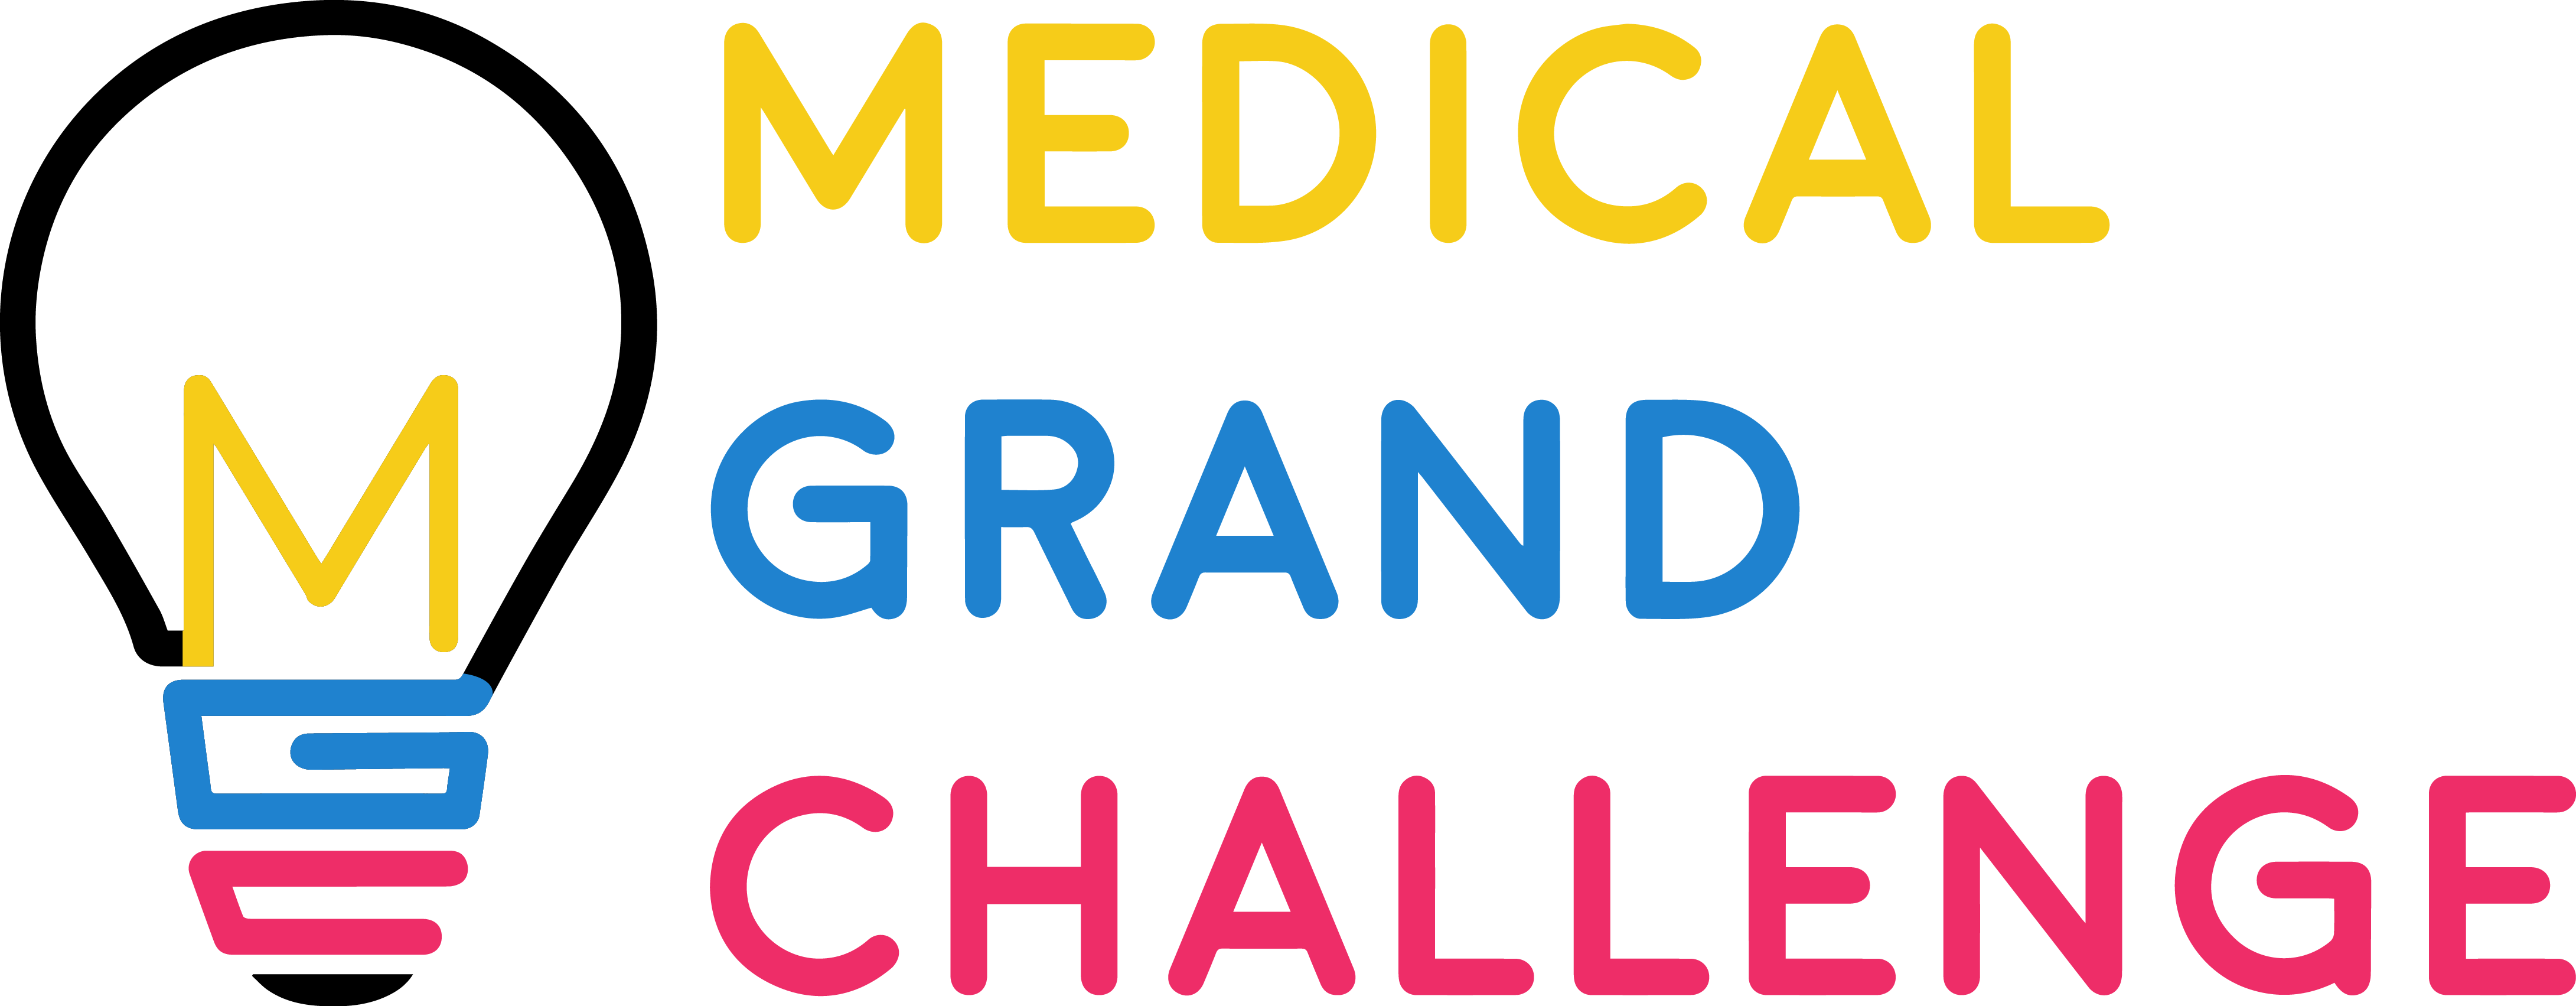 Medical Grand
                            Challenge